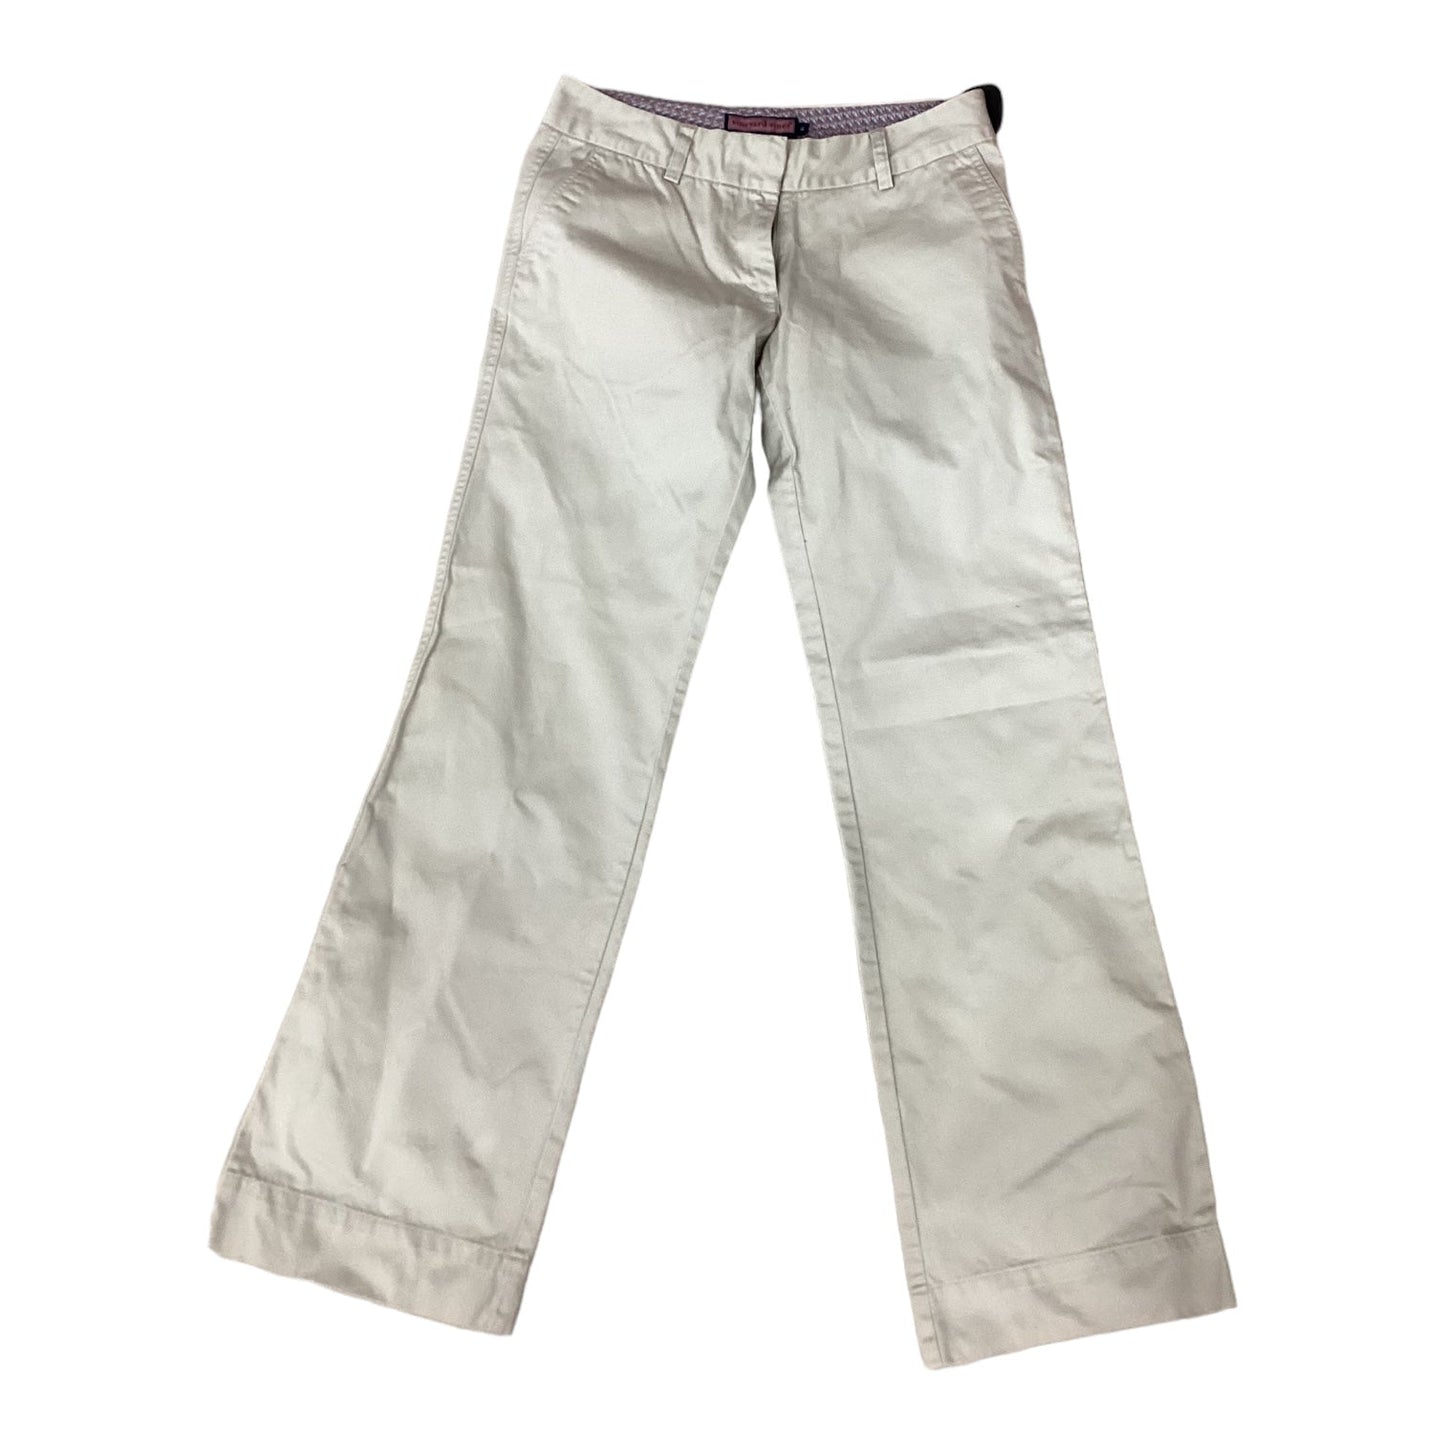 Pants Work/dress By Vineyard Vines  Size: 4